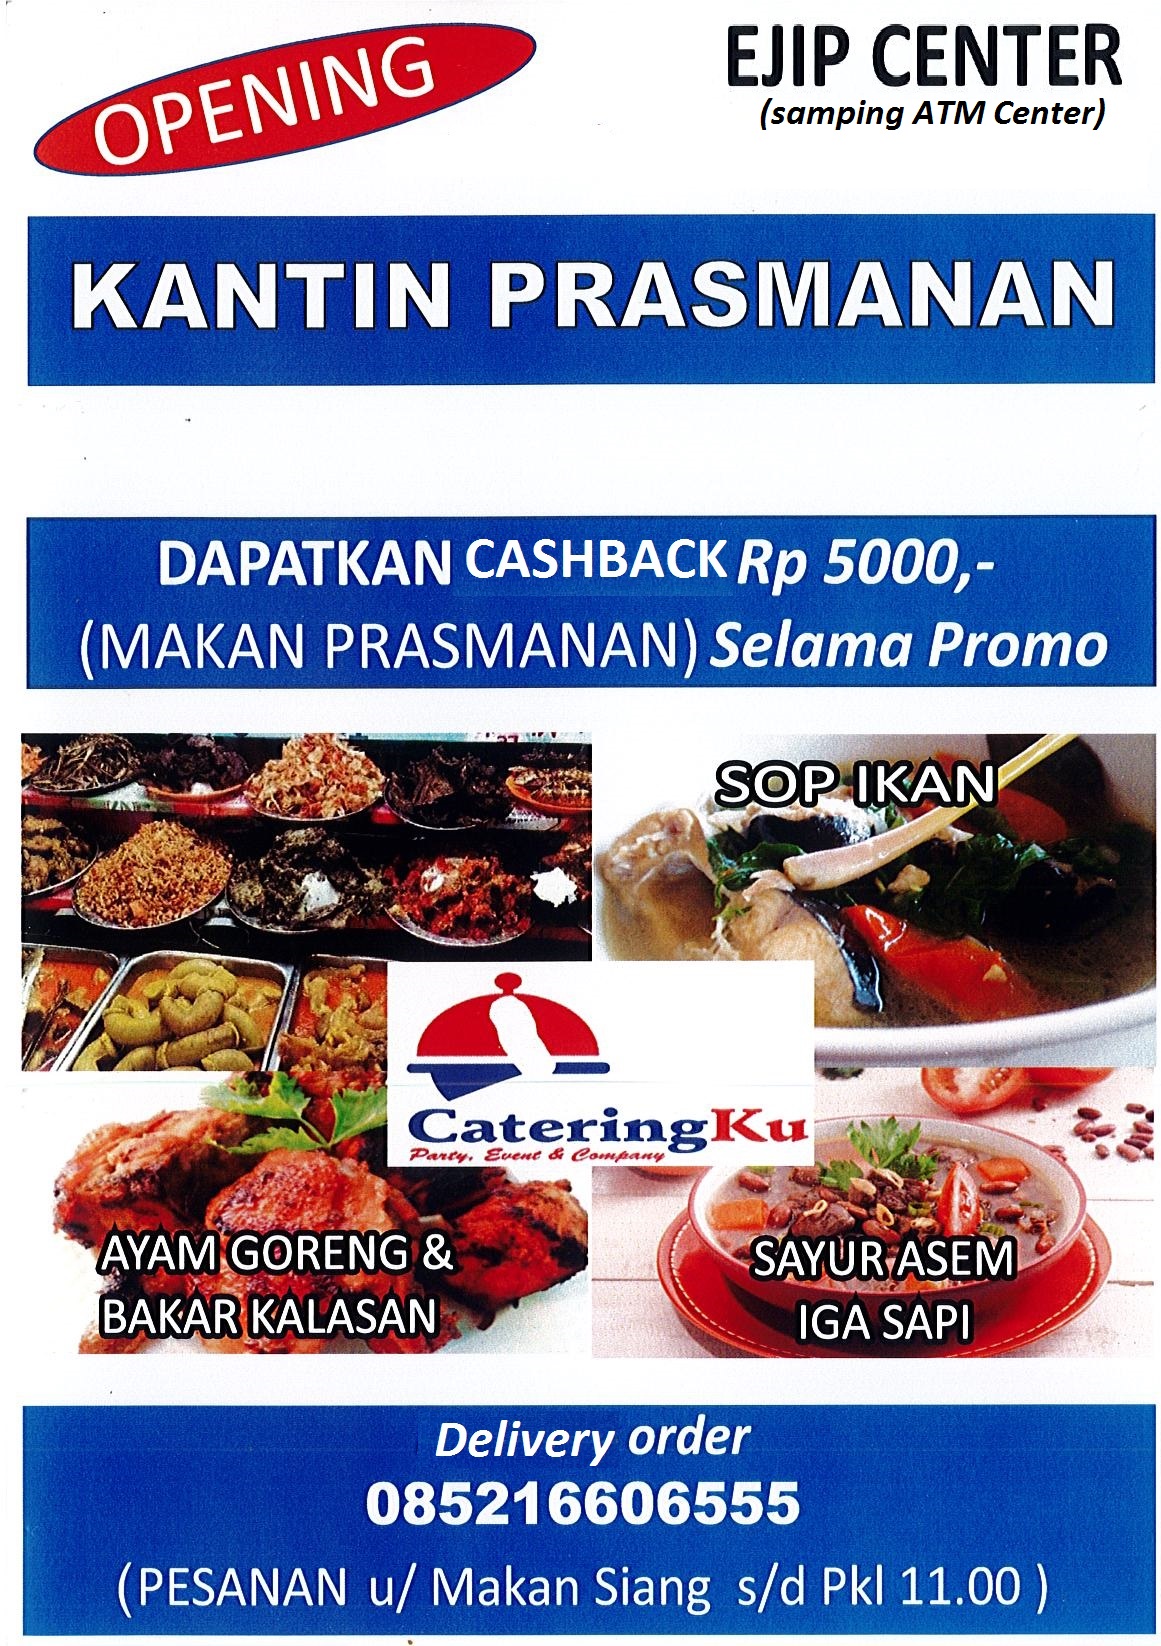 Indonesian food restaurant open @EJIP center